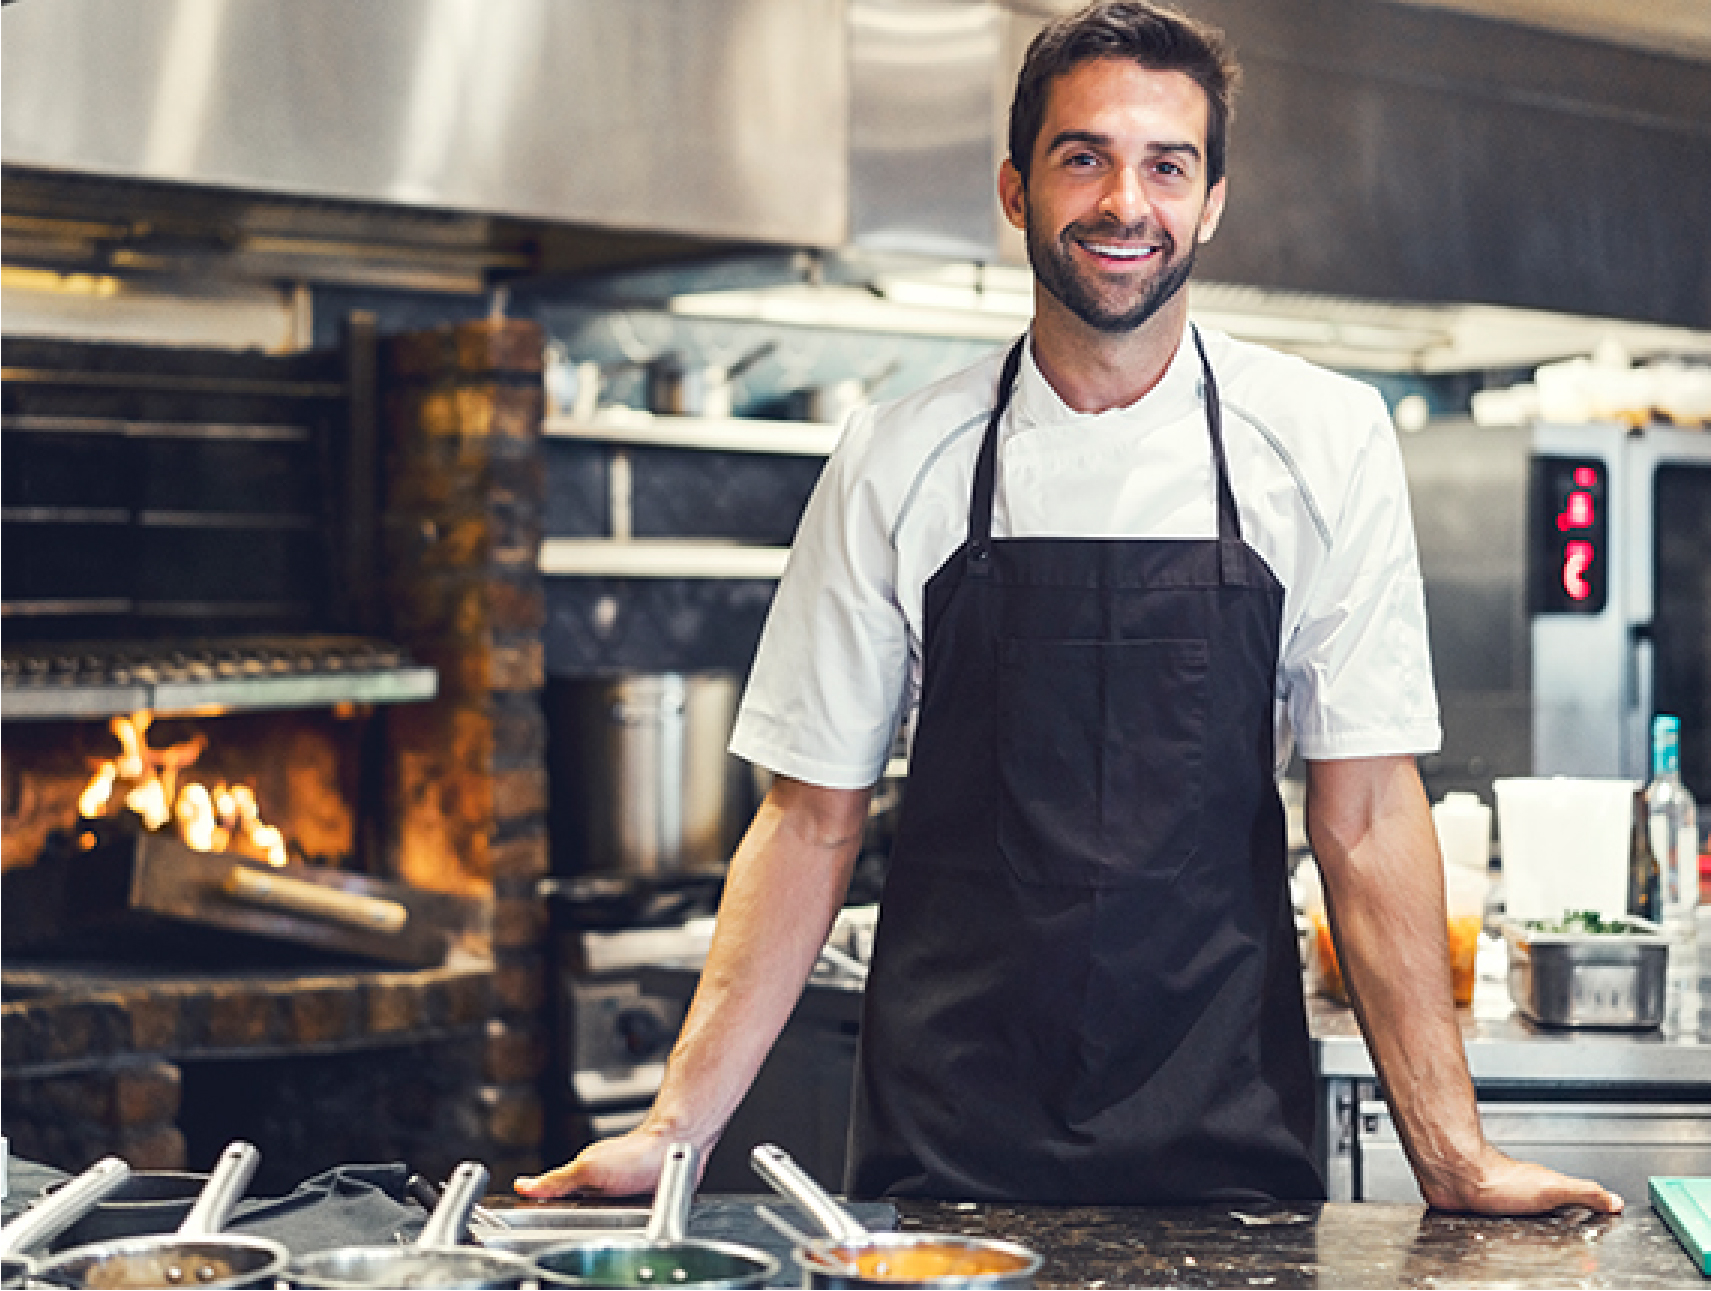 Man smiling in kitchen wearing an apron